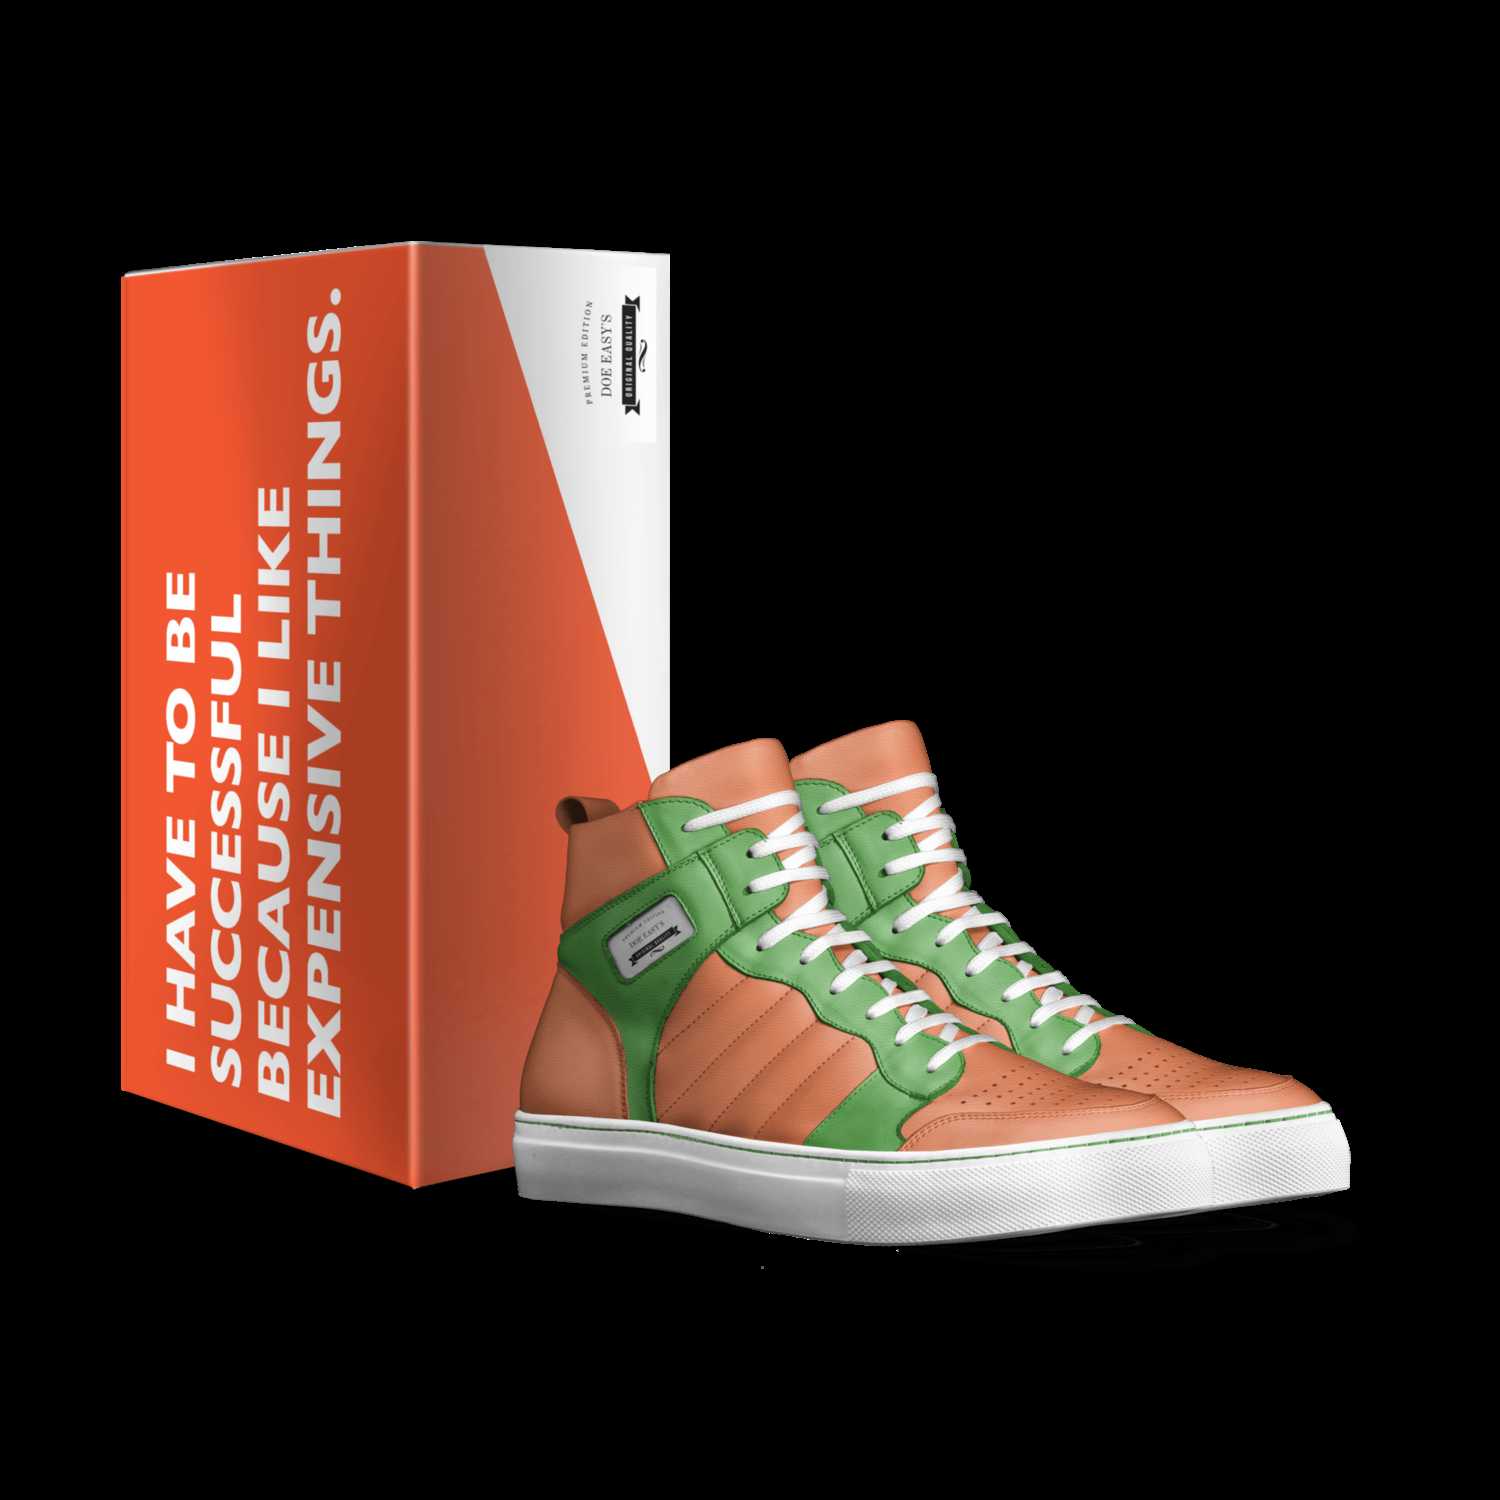 A Custom Shoe concept by Jonathan Davis